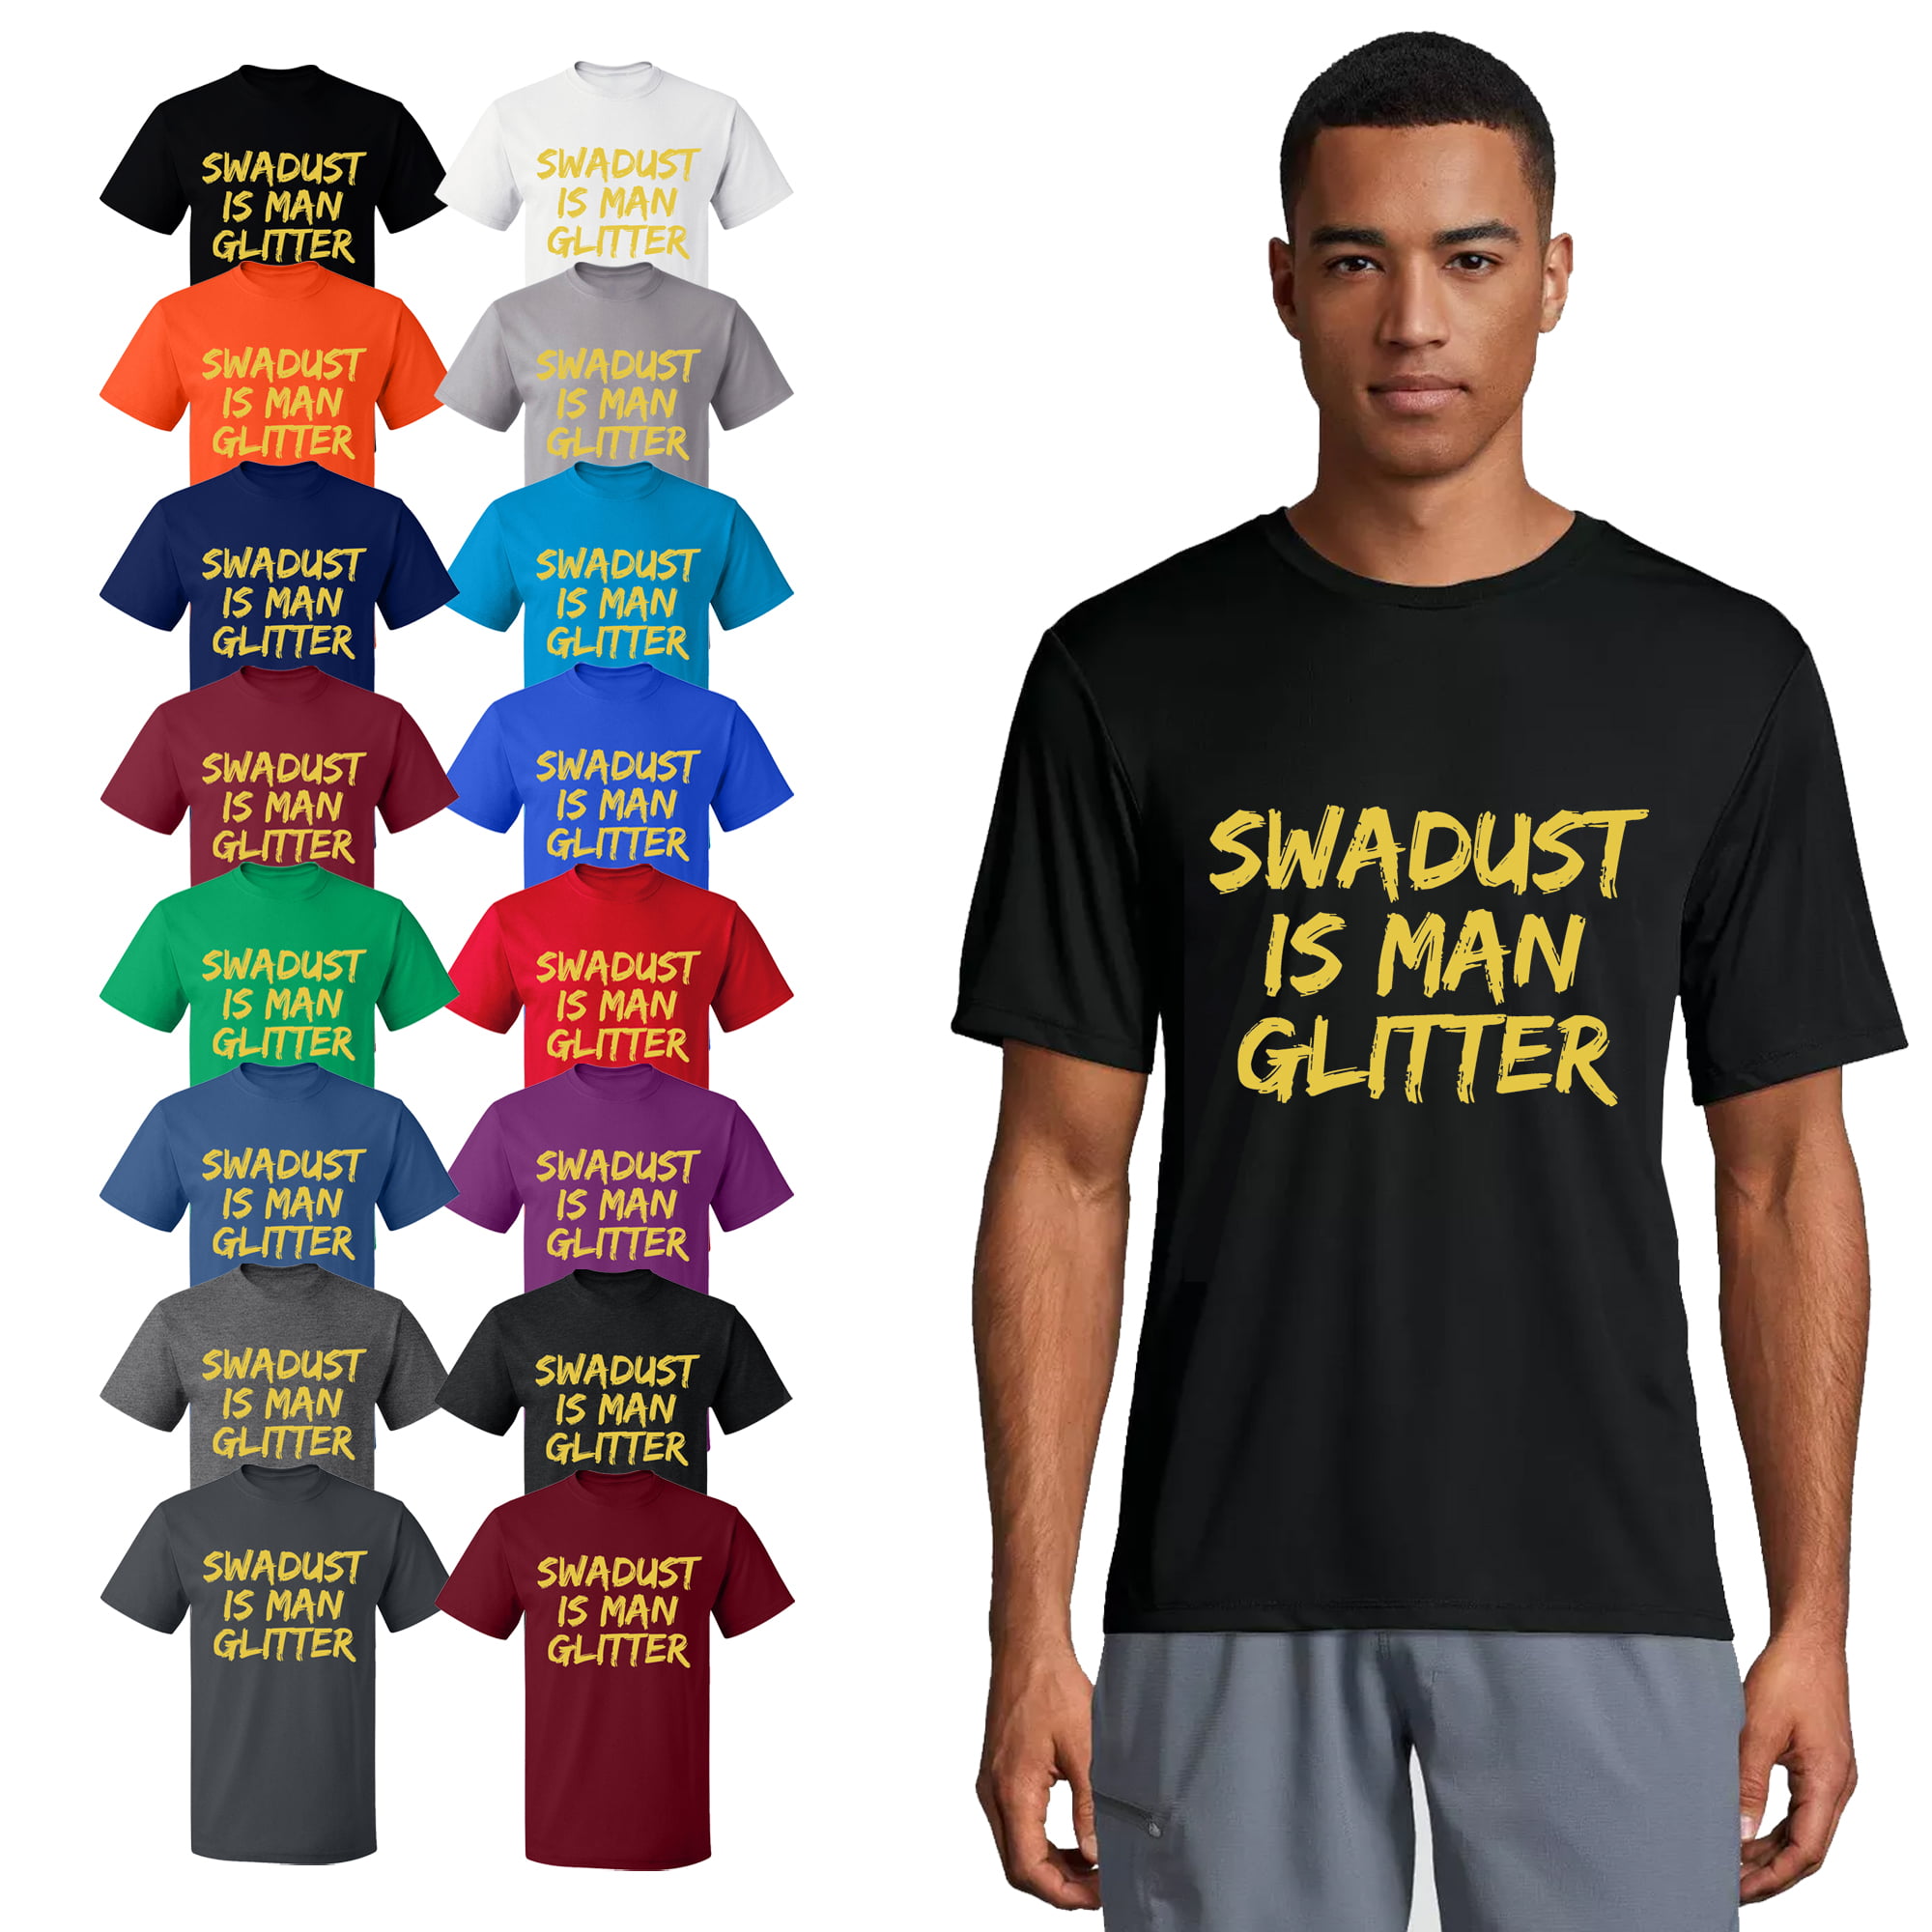 OXI T-Shirt - Swadust is Man Glitter, Basic Casual T-Shirt for Men\'s and  Women Fleece T-Shirt Short Sleeve - Navy Blue 3X-Large